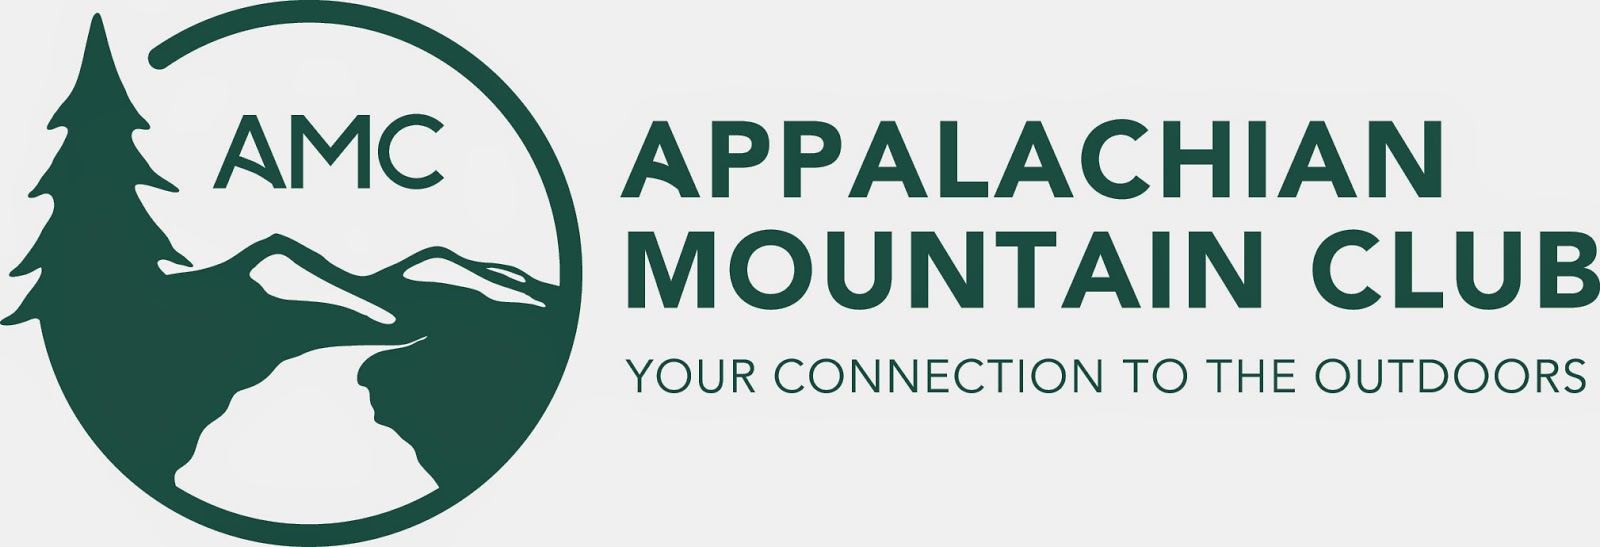 Appalachian Mountain Club News: Evolving AMC's Brand